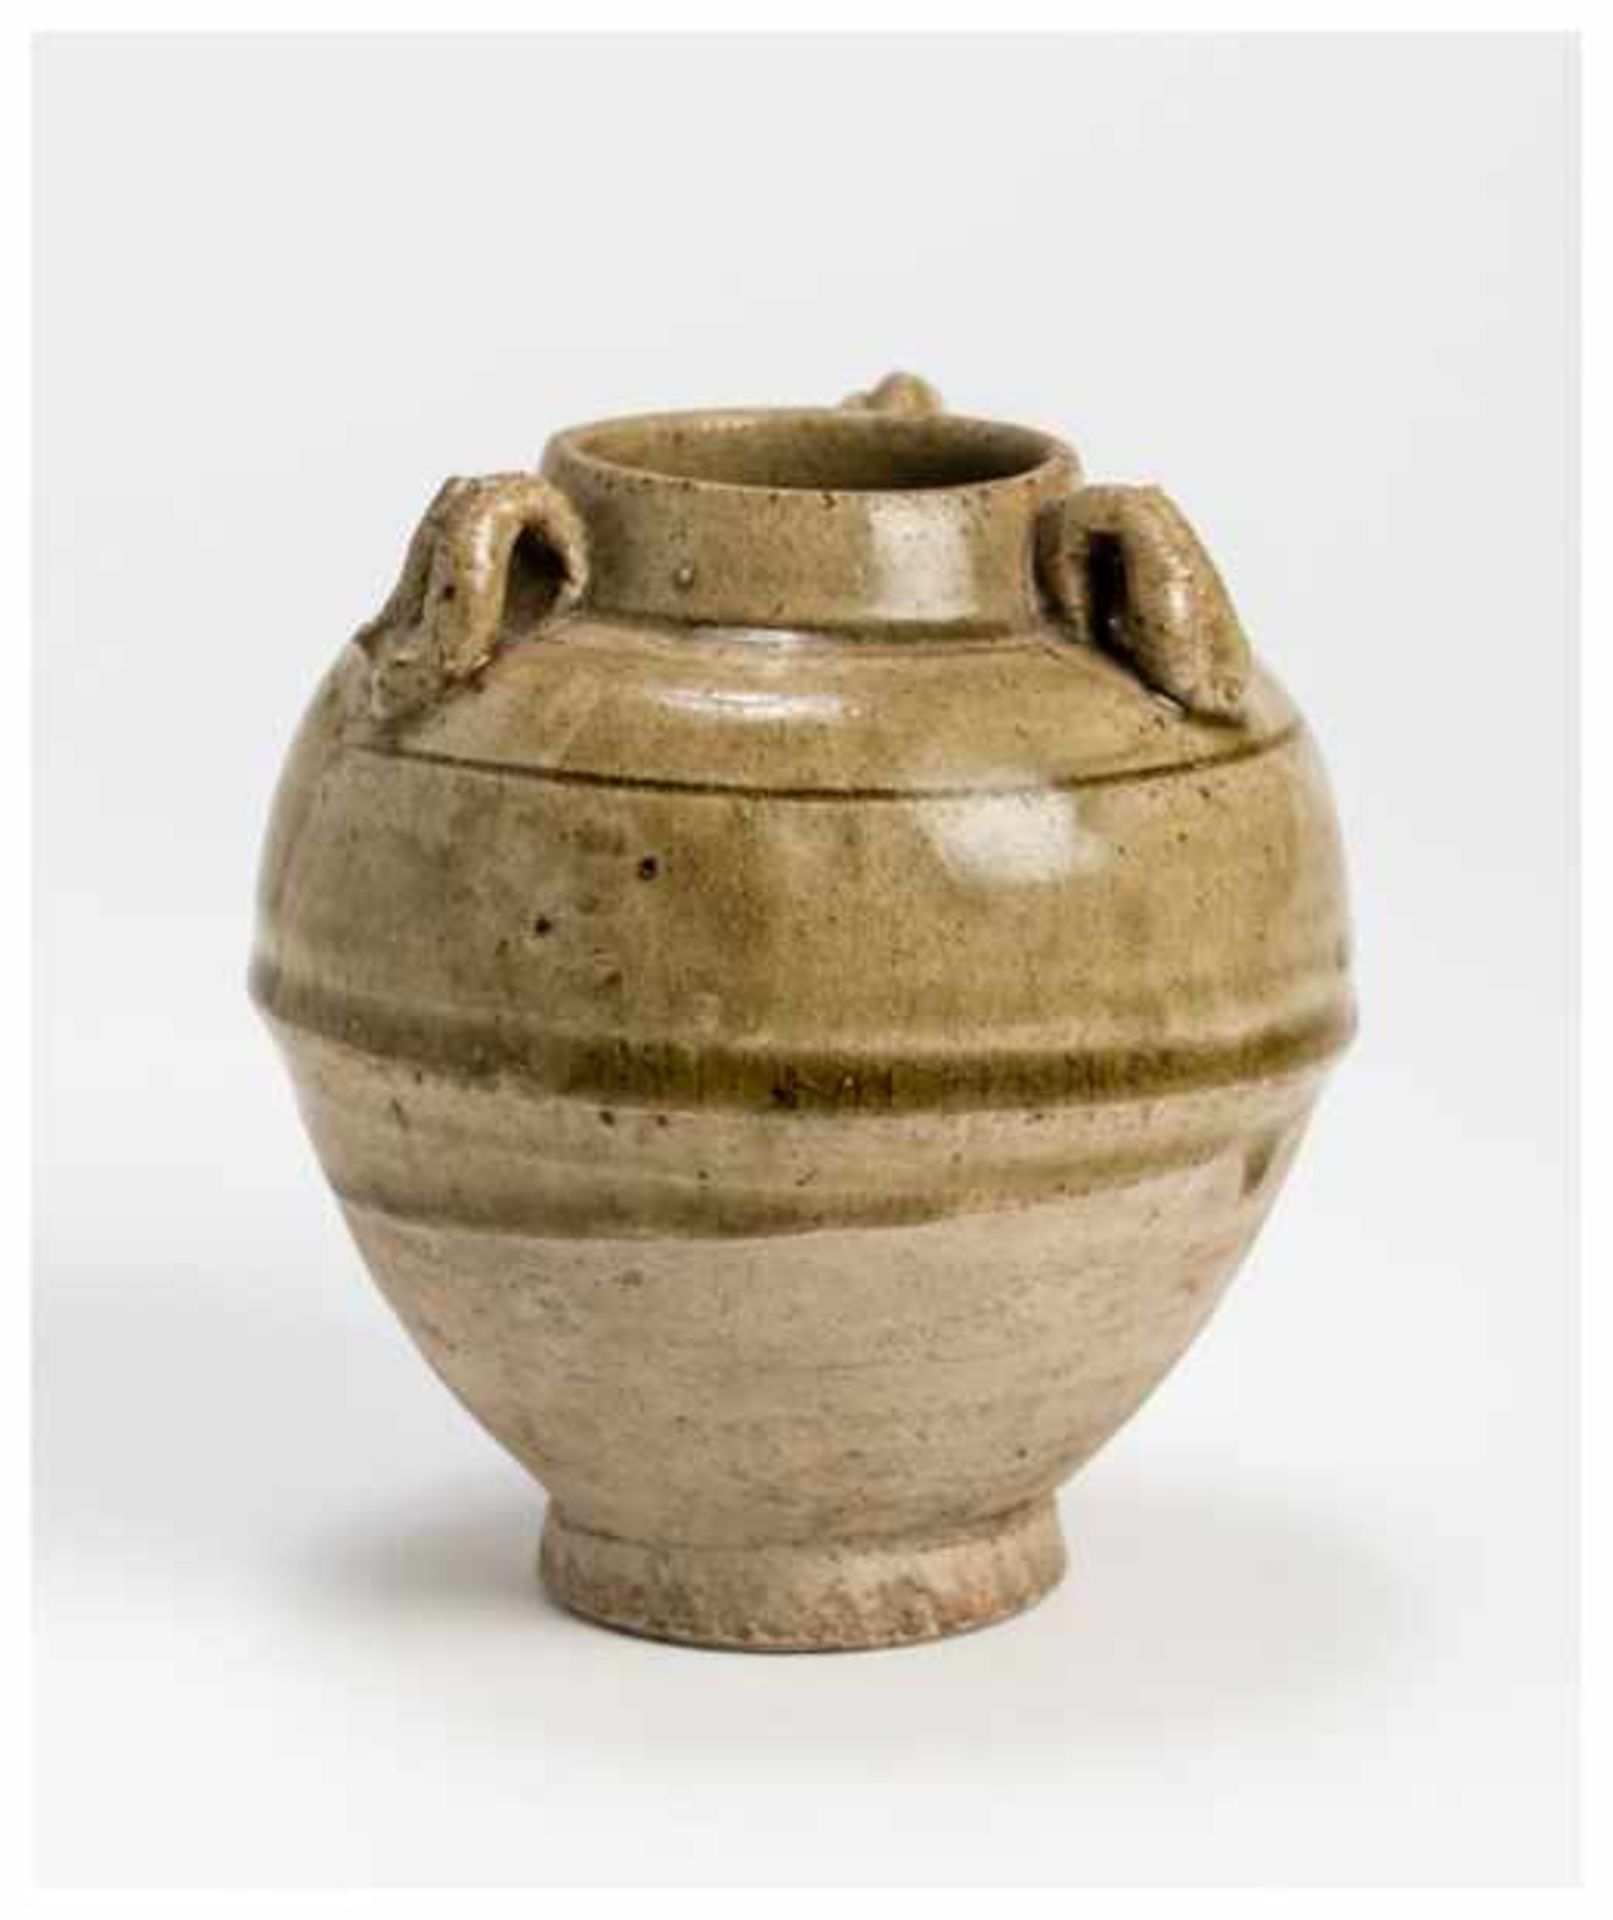 A CHINESE GLAZED CERAMIC POT VESSEL Glazed ceramic. China, Ming dynastyOvoid, rounded sides on a